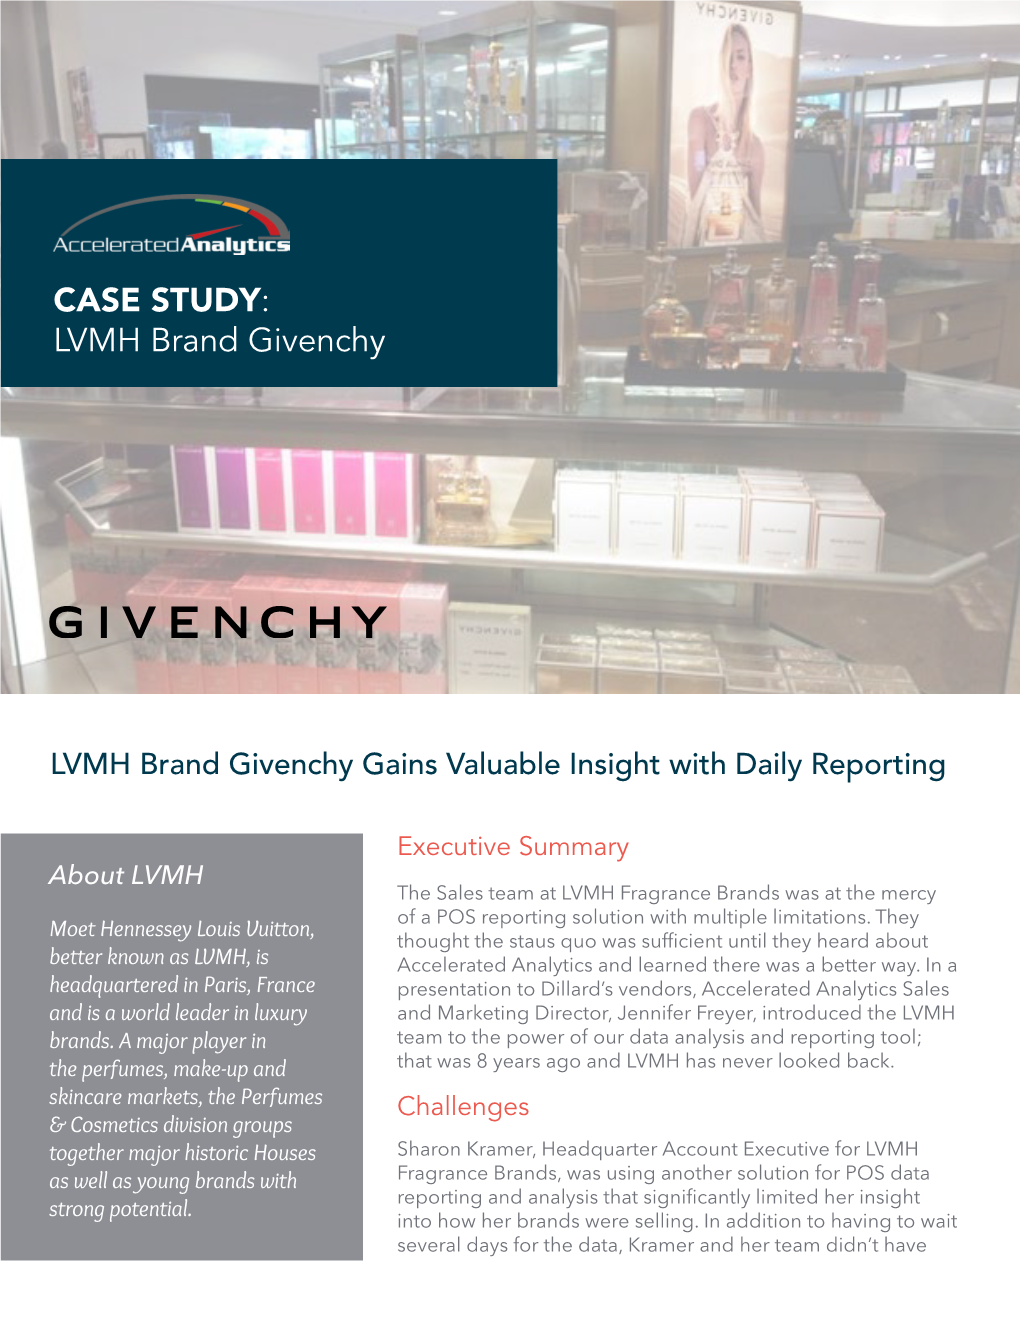 CASE STUDY: LVMH Brand Givenchy